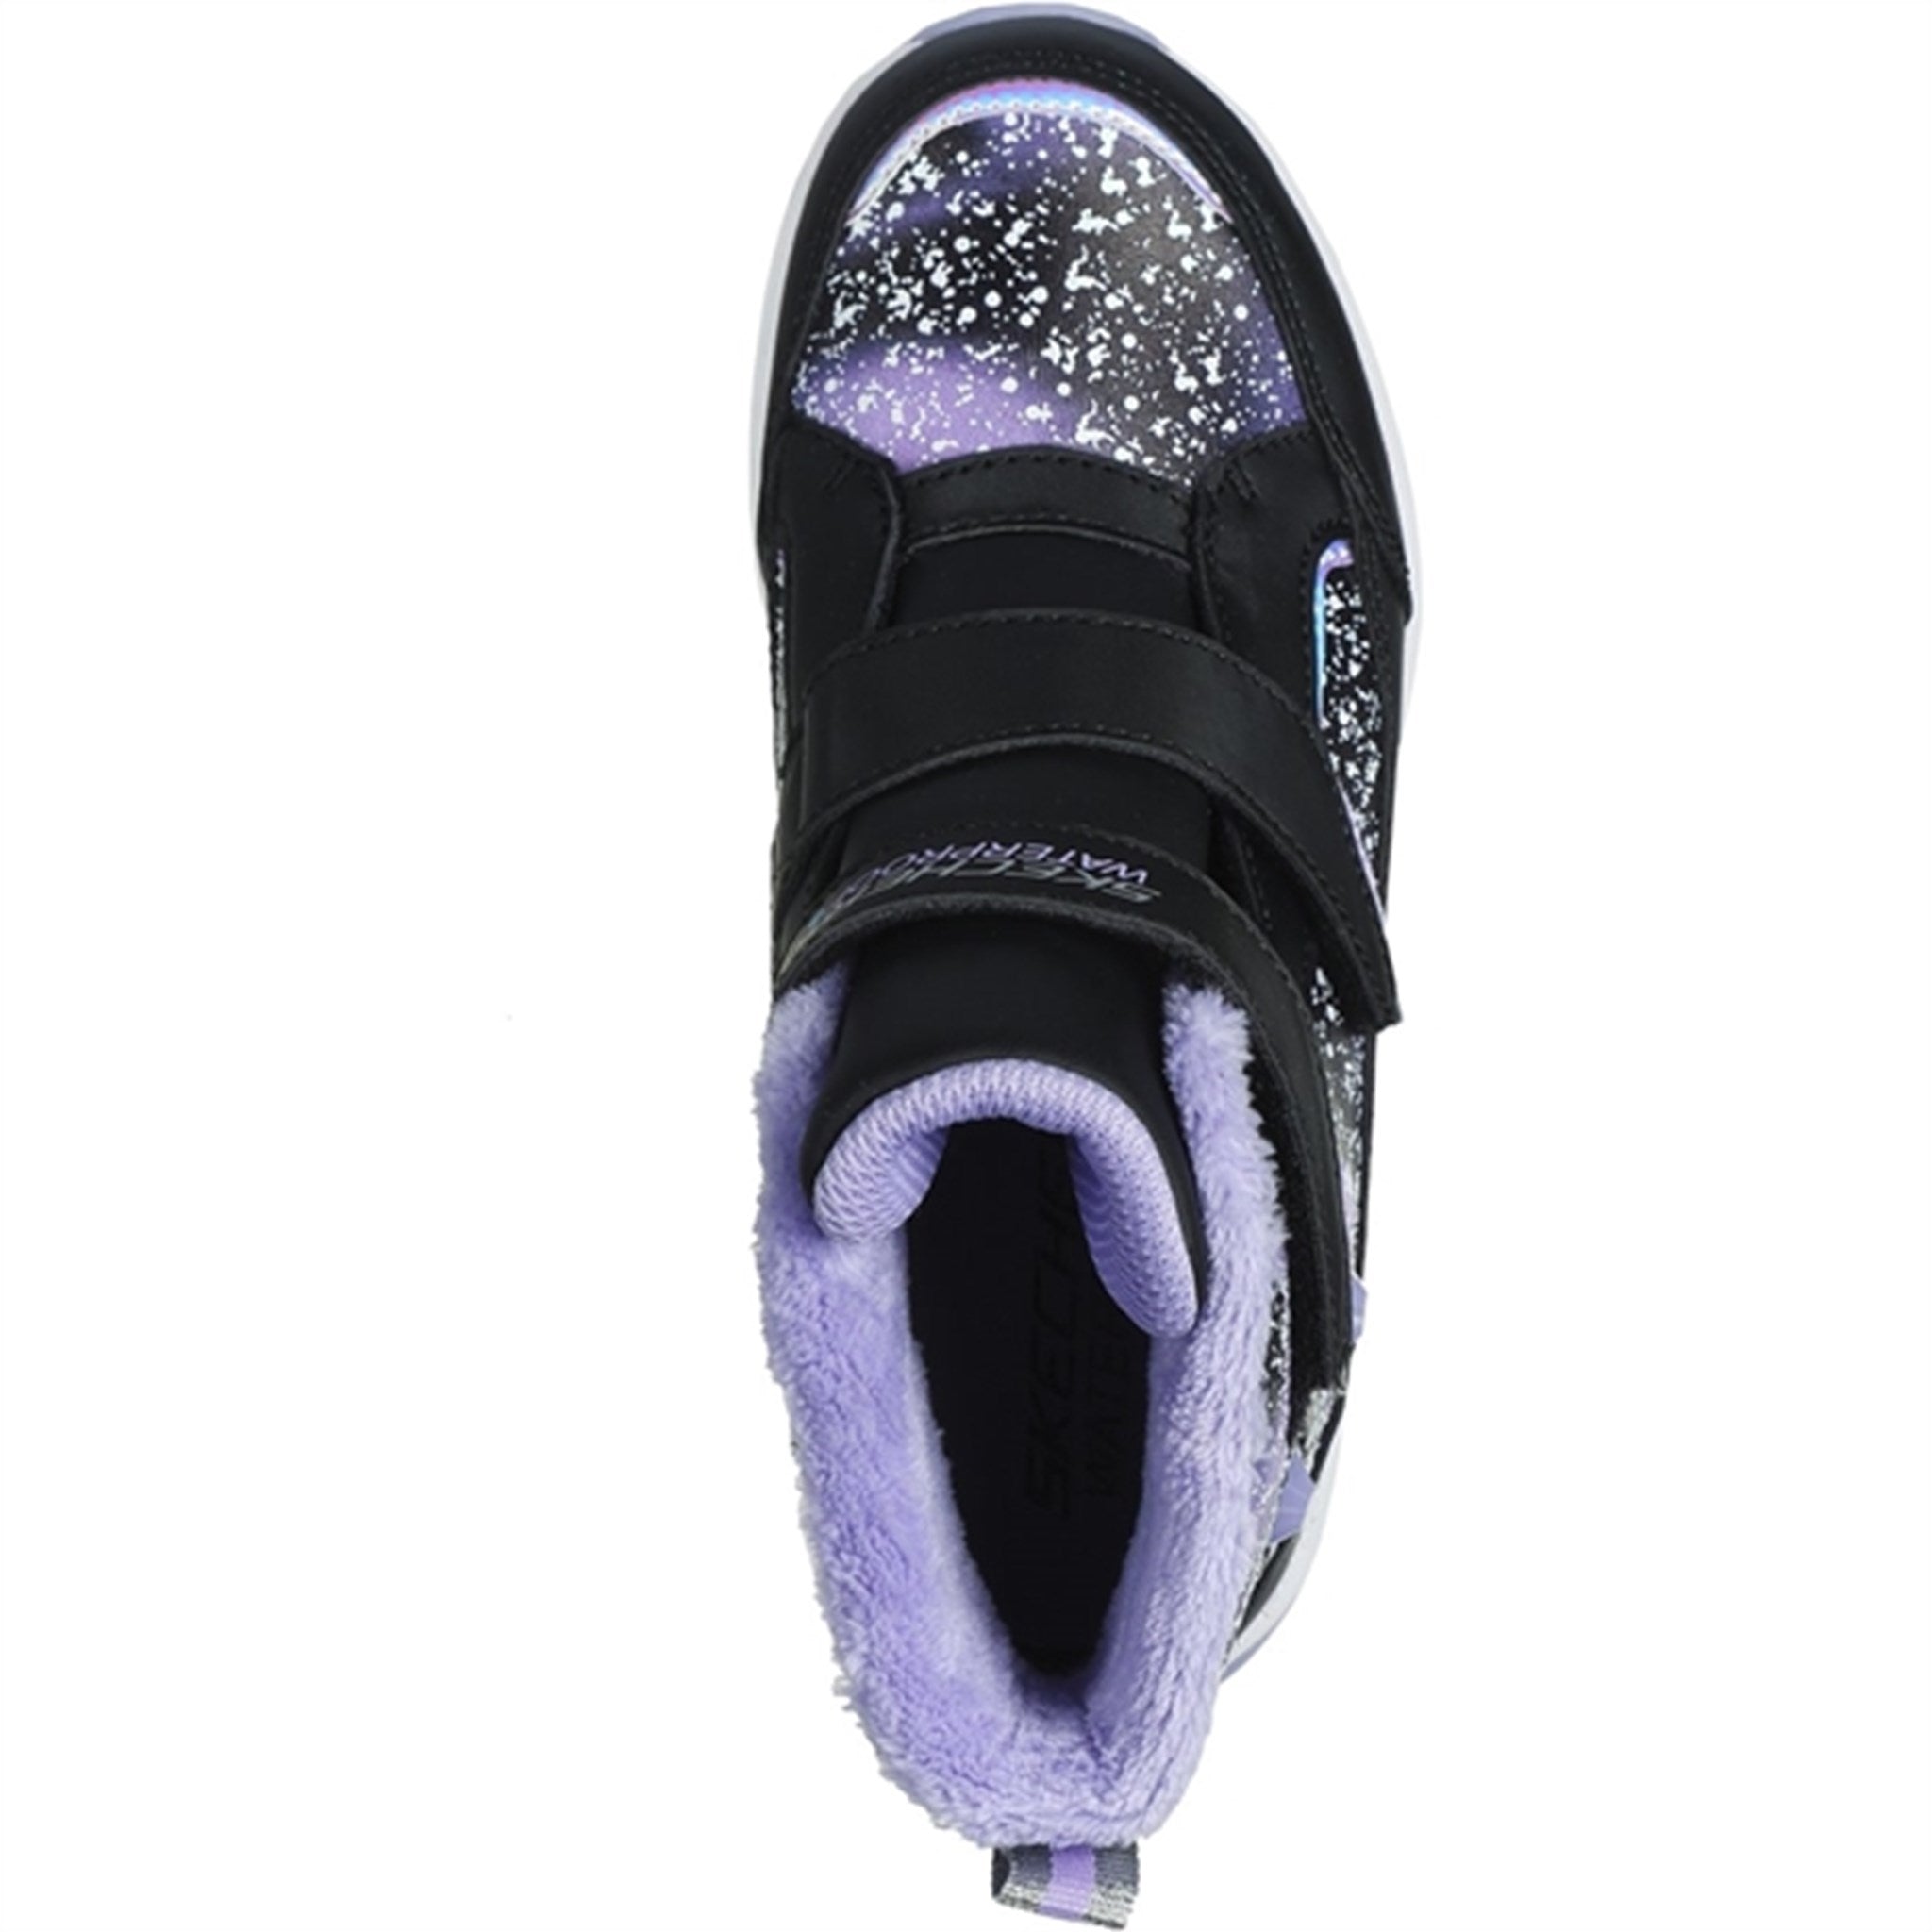 Skechers Girls Storm Blazer Waterproof Boots Black Lavender 3